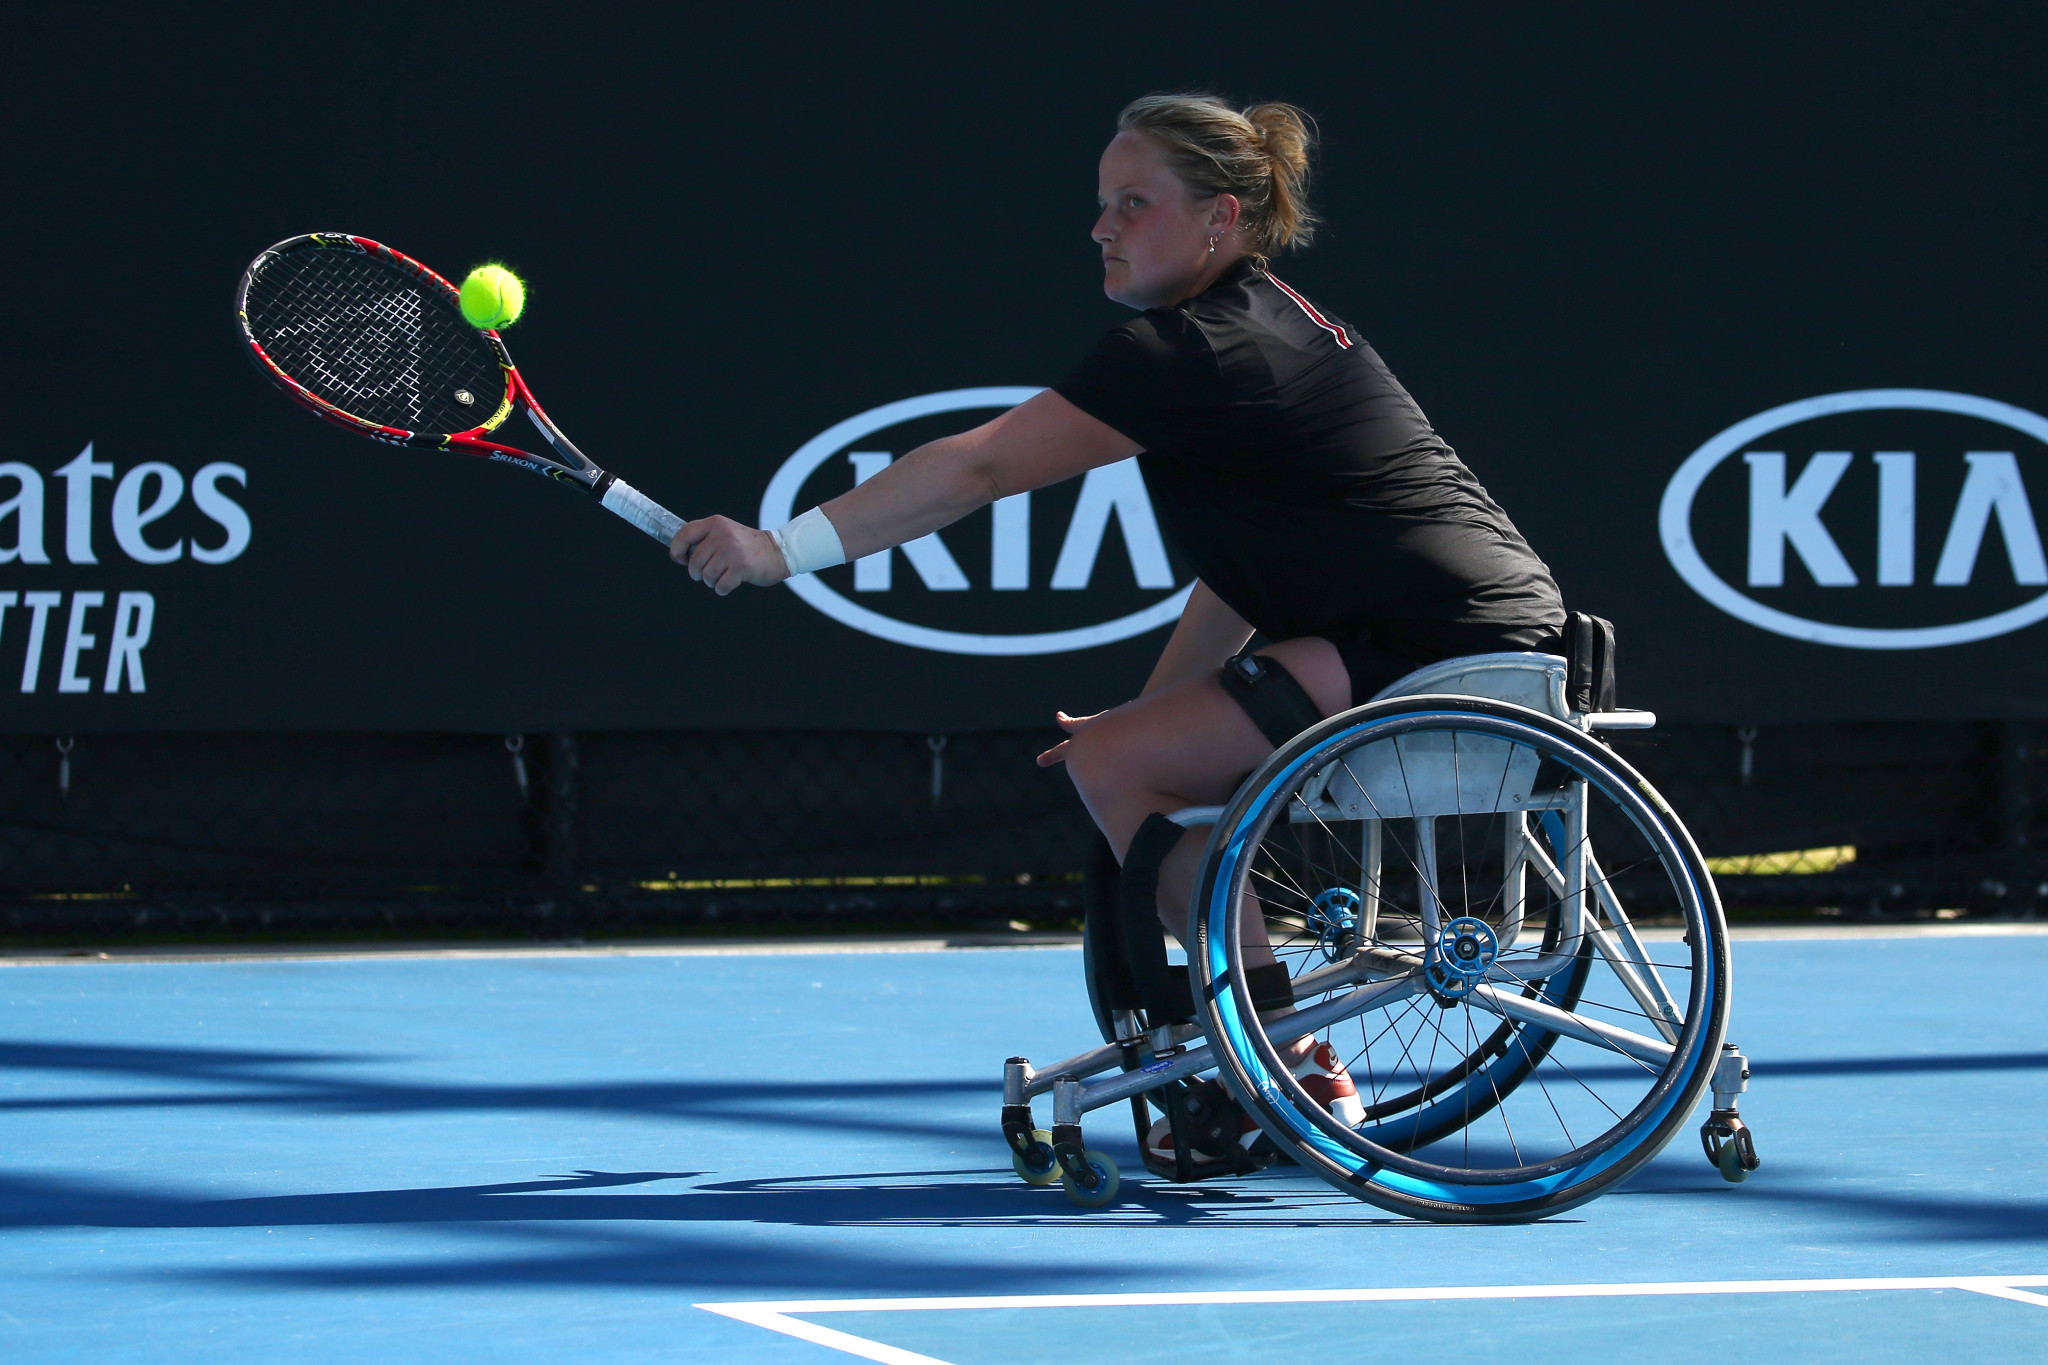 Dutch star van Koot ousts Kamiji to reach wheelchair tennis final at Wimbledon